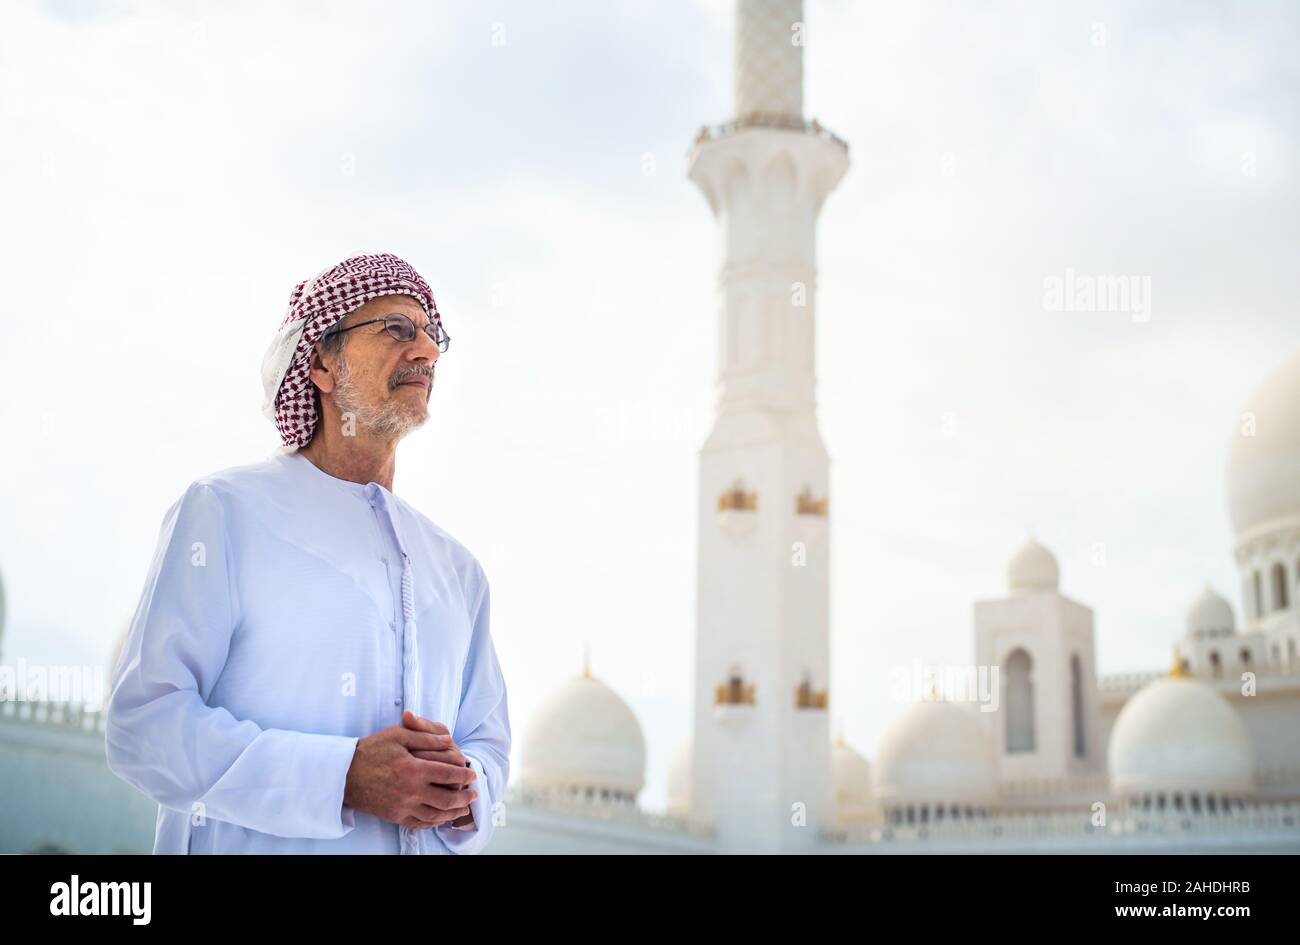 Arab man visiting the Grand Mosque in Abu Dhabi wearing kandora Stock Photo